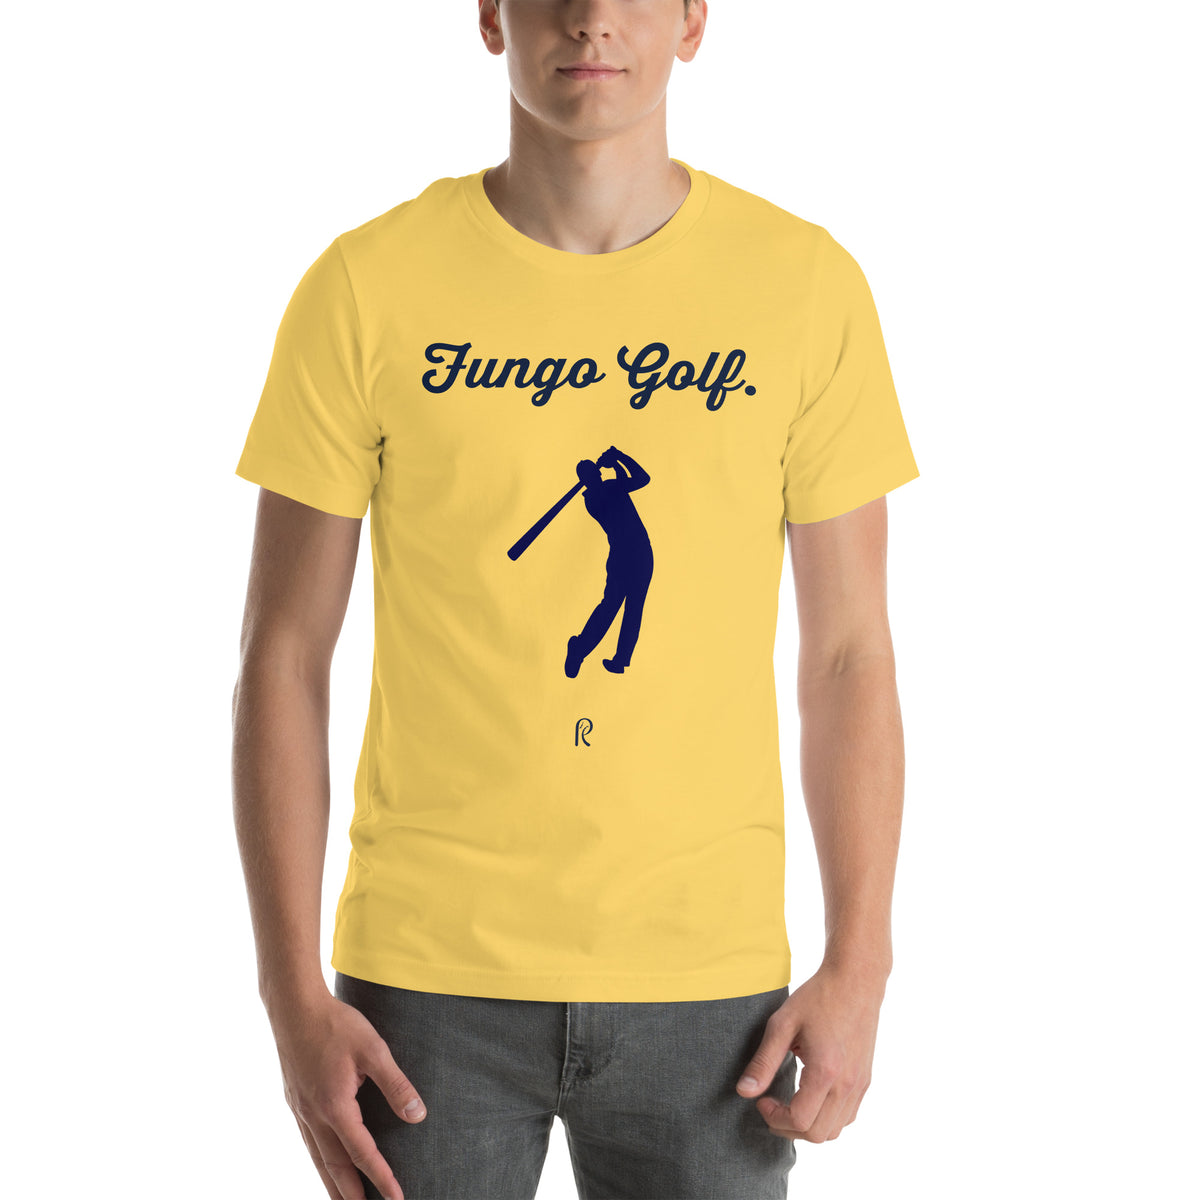 Fungo Golf (Yellow)